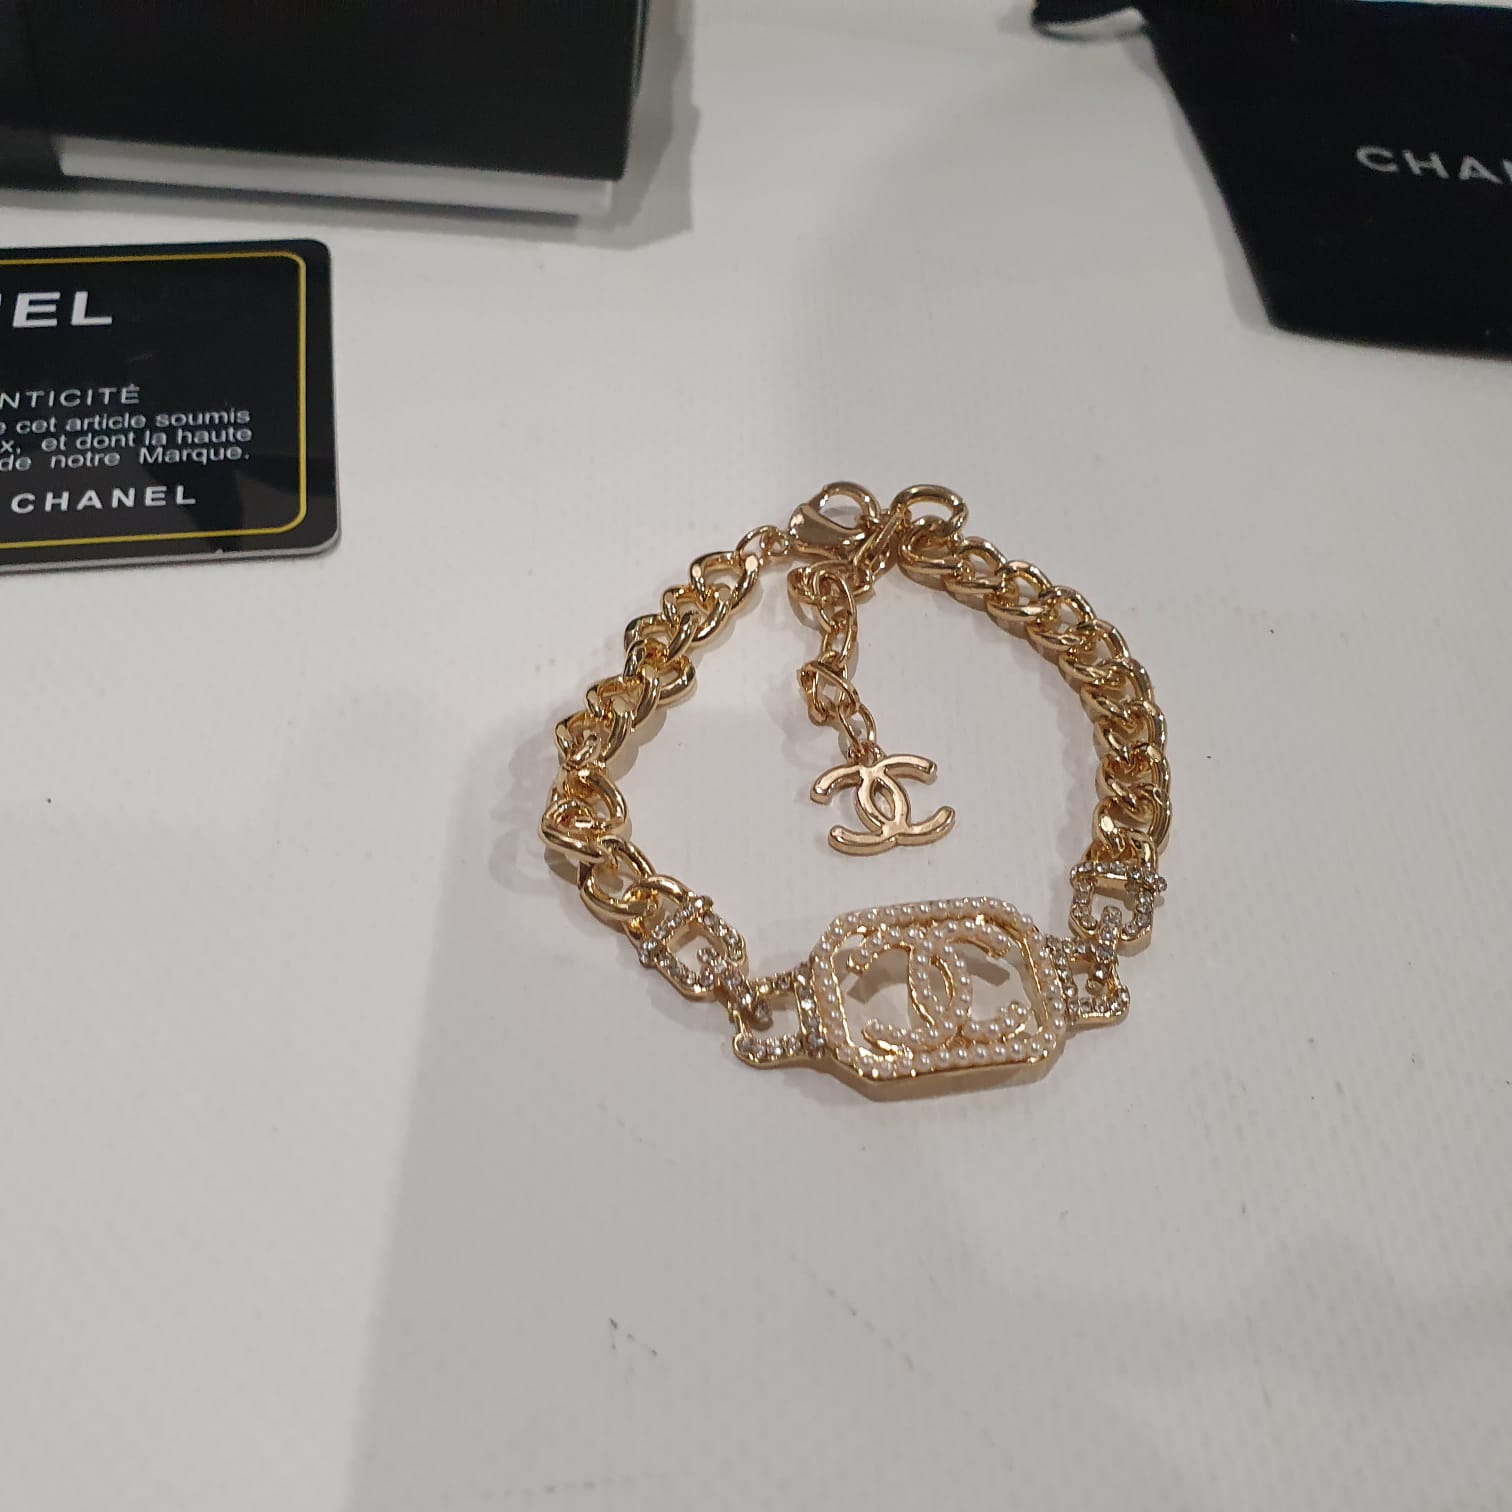 Chanel  Choker Necklace and Bracelet